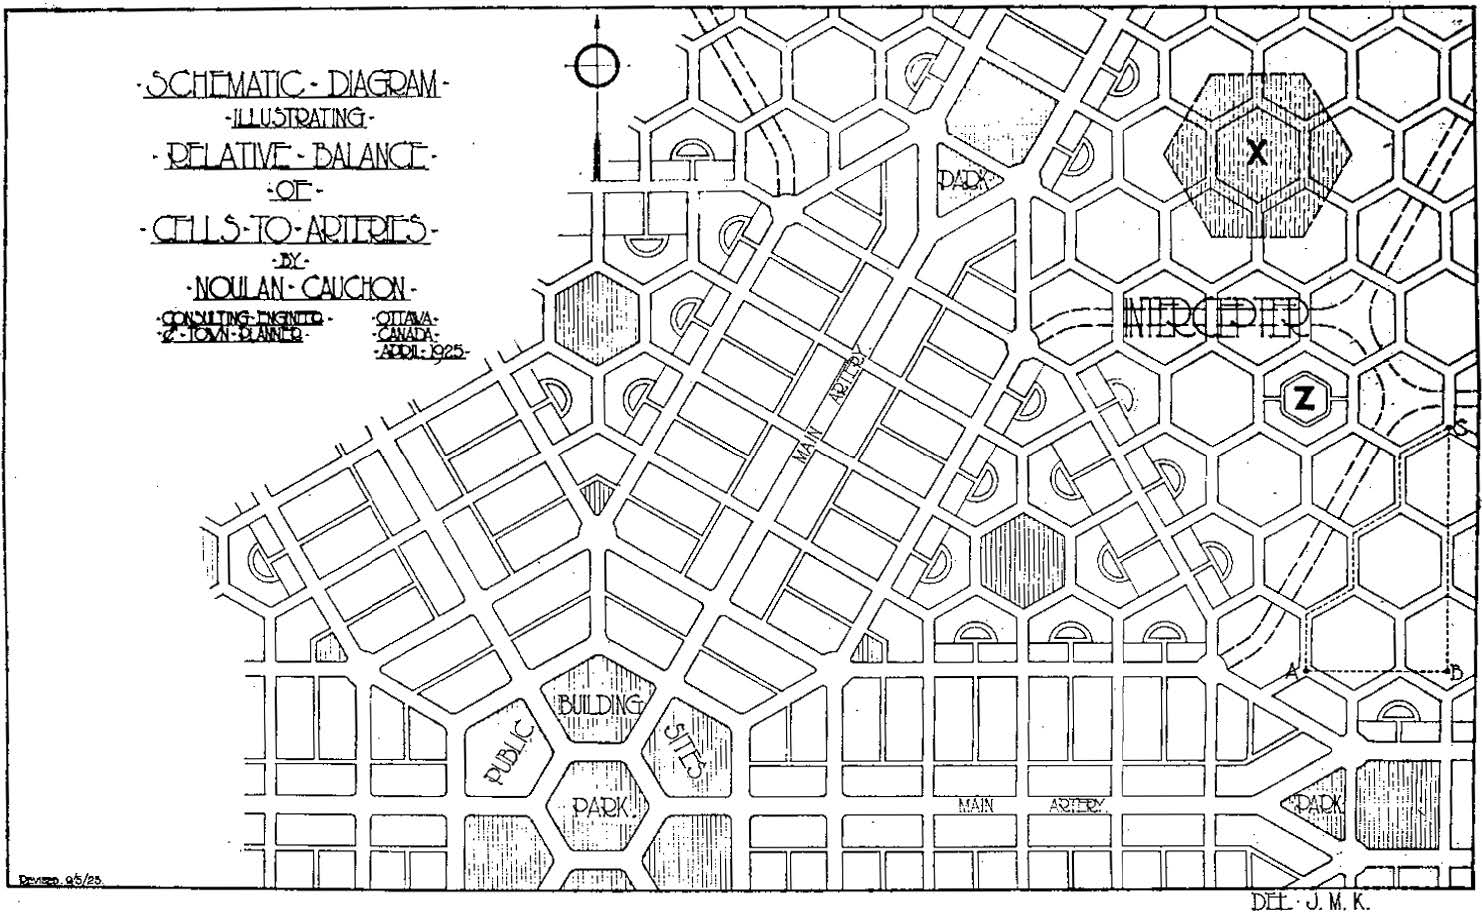 Noulan Cauchon “六角形规划”。［ Noulan Cauchon, “Hexagonal Blocks forResidential Districts,” The American City , 17 (1925)］